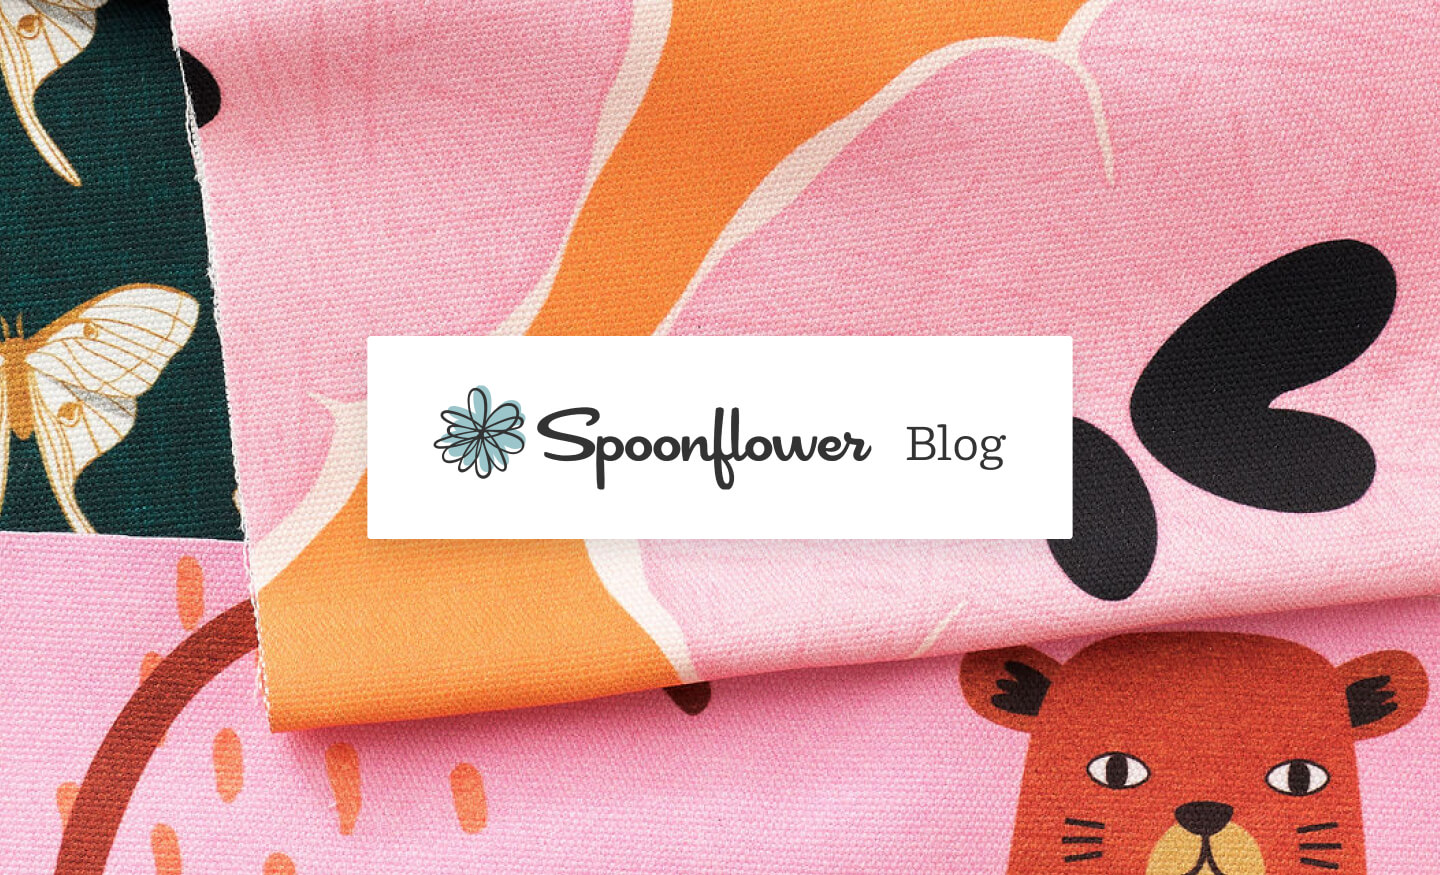 Spoonflower Blog Website Design & Development by MRC